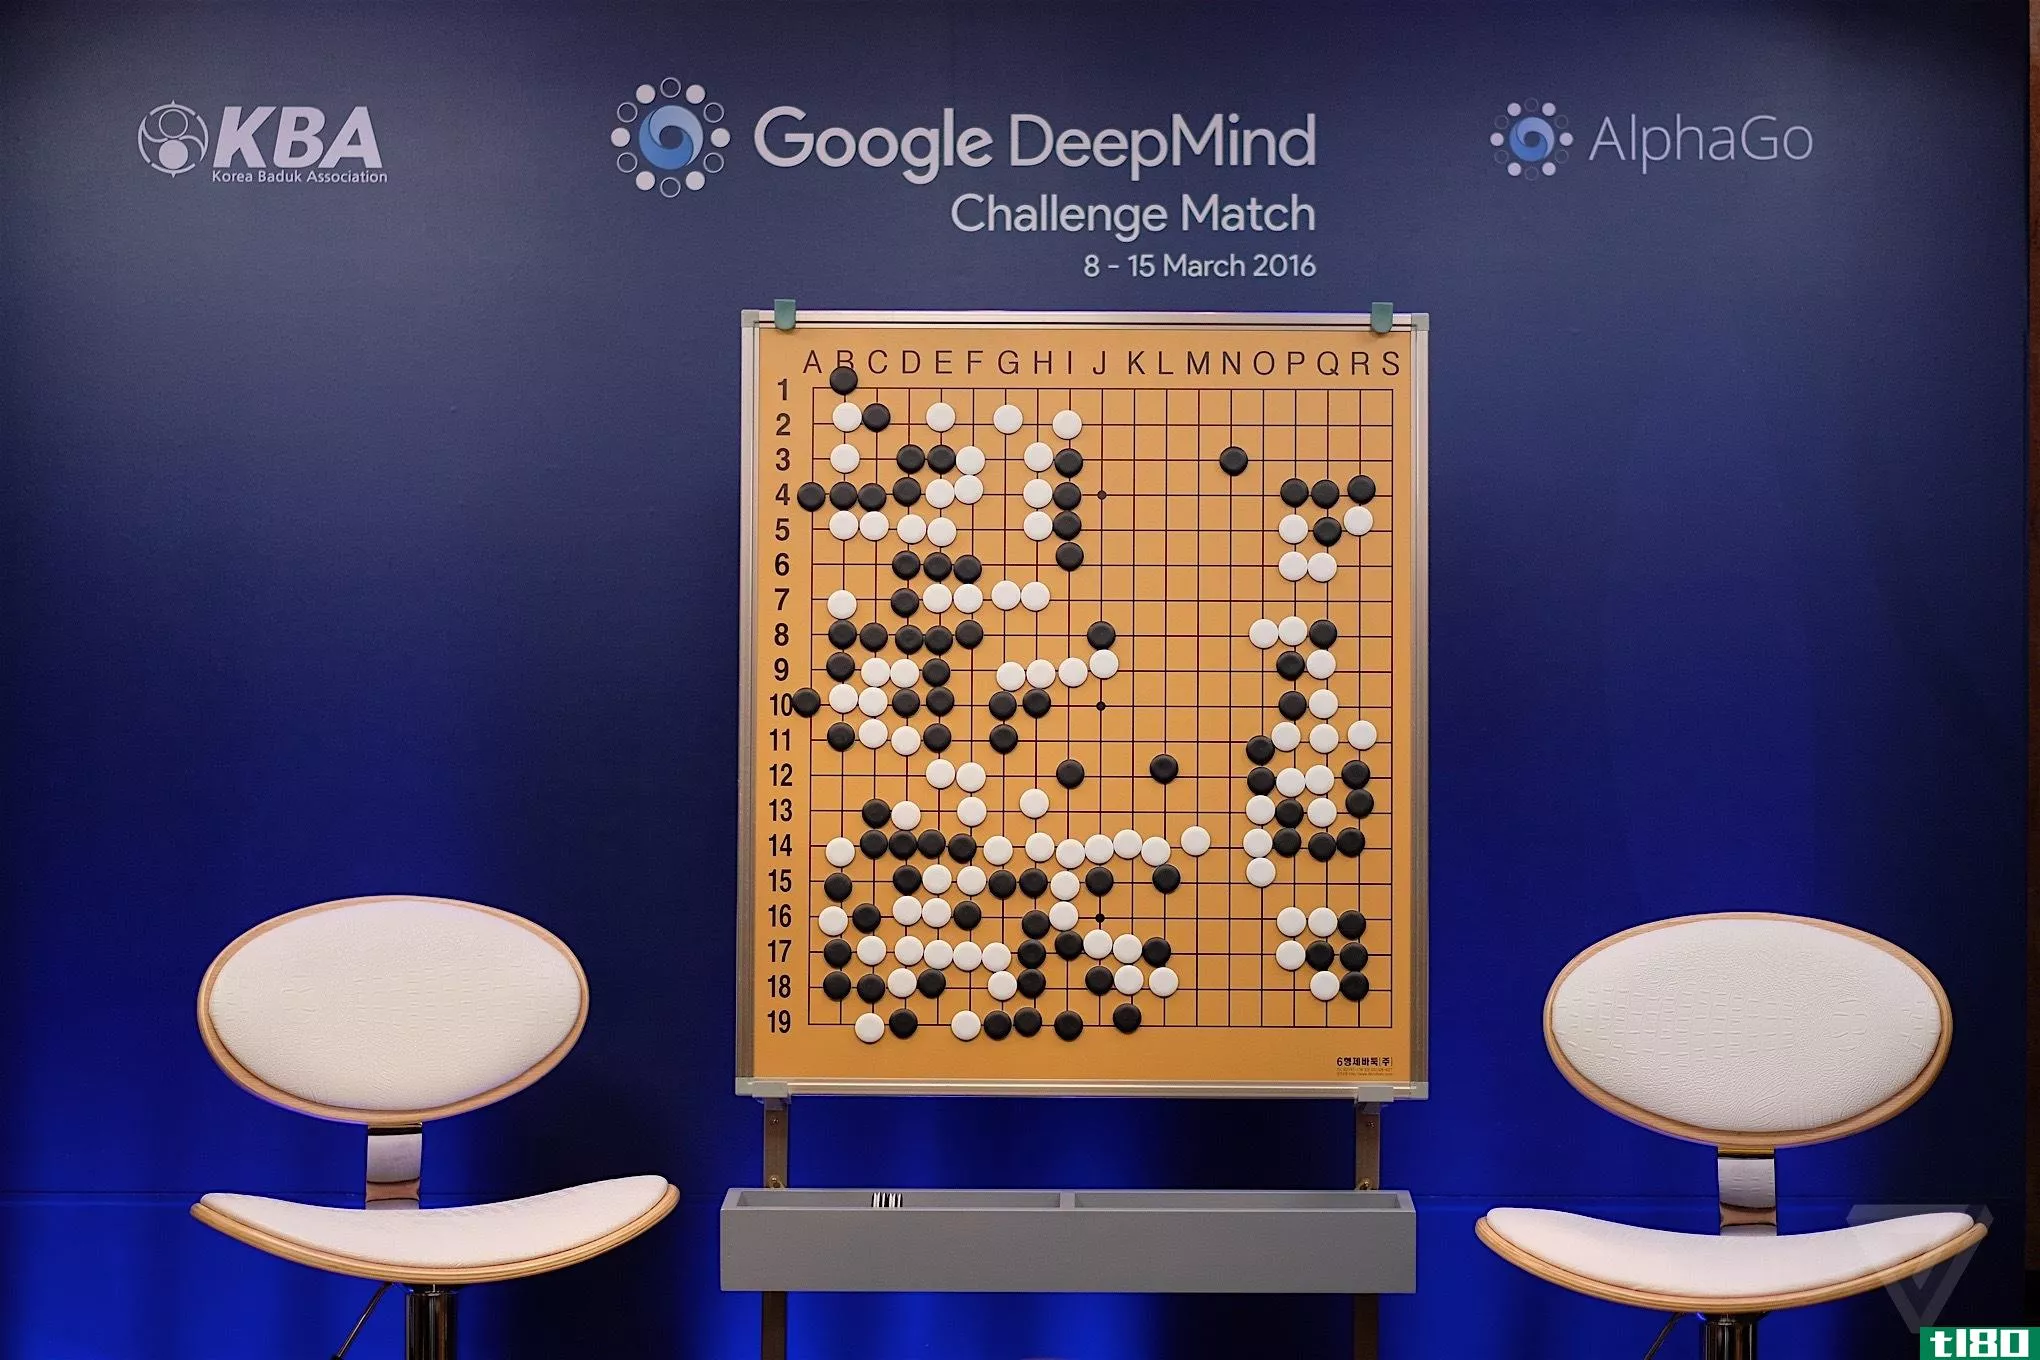 alphago再次击败lee se dol，获得谷歌deepmind挑战赛系列